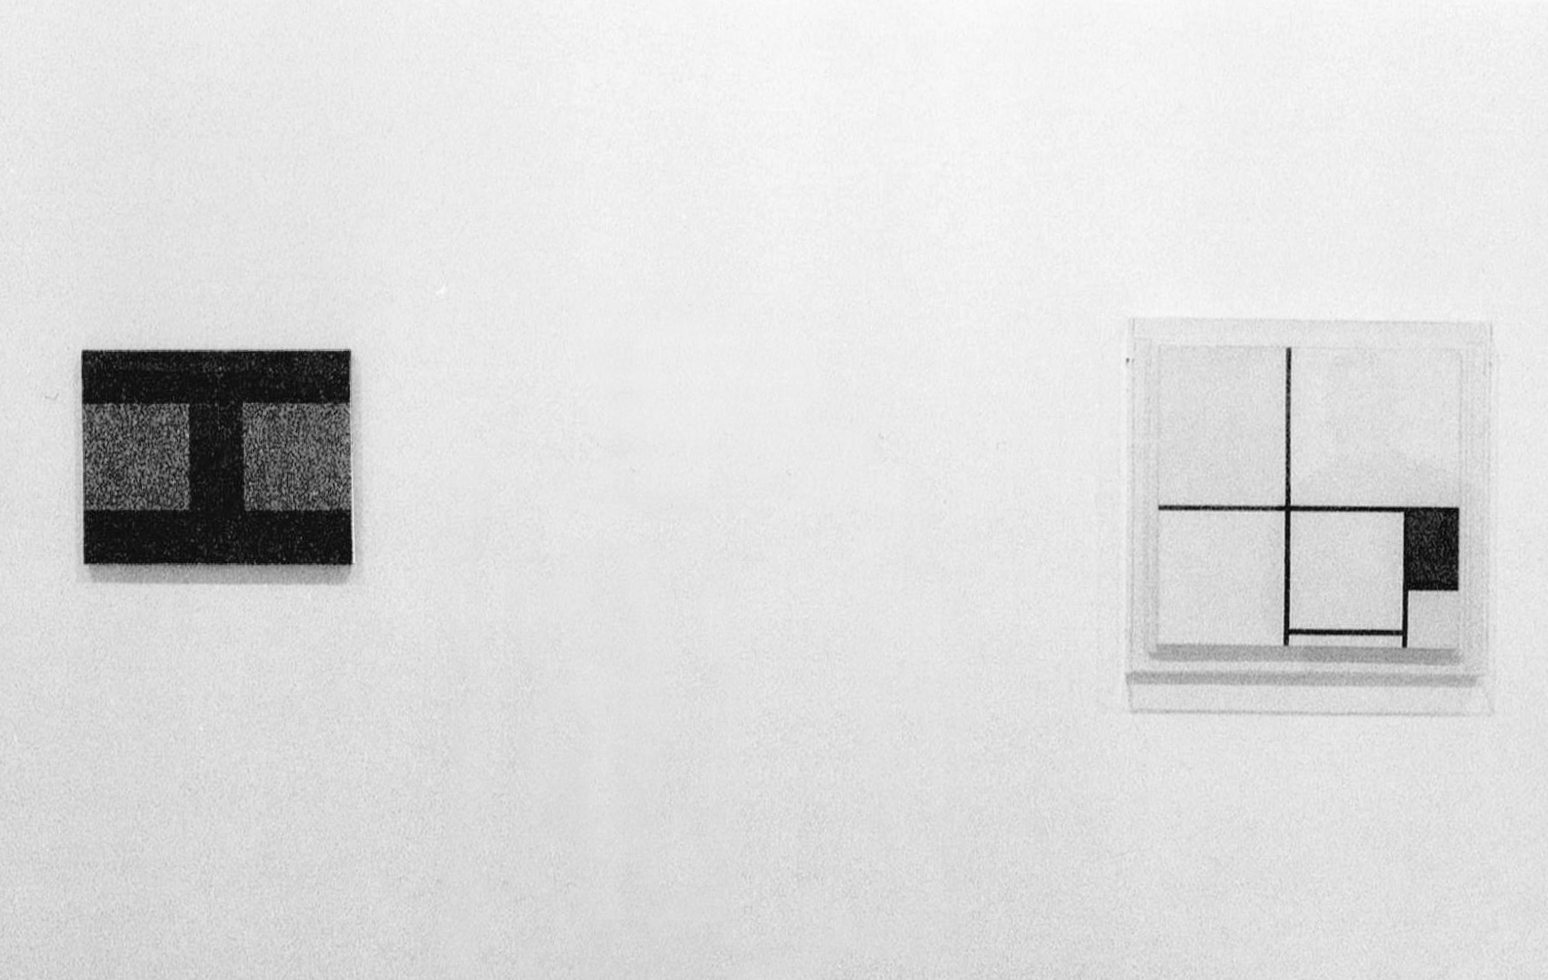 Installation of&nbsp;Basics on Composition, Peter Blum Gallery, New York, NY, 1994

&nbsp;